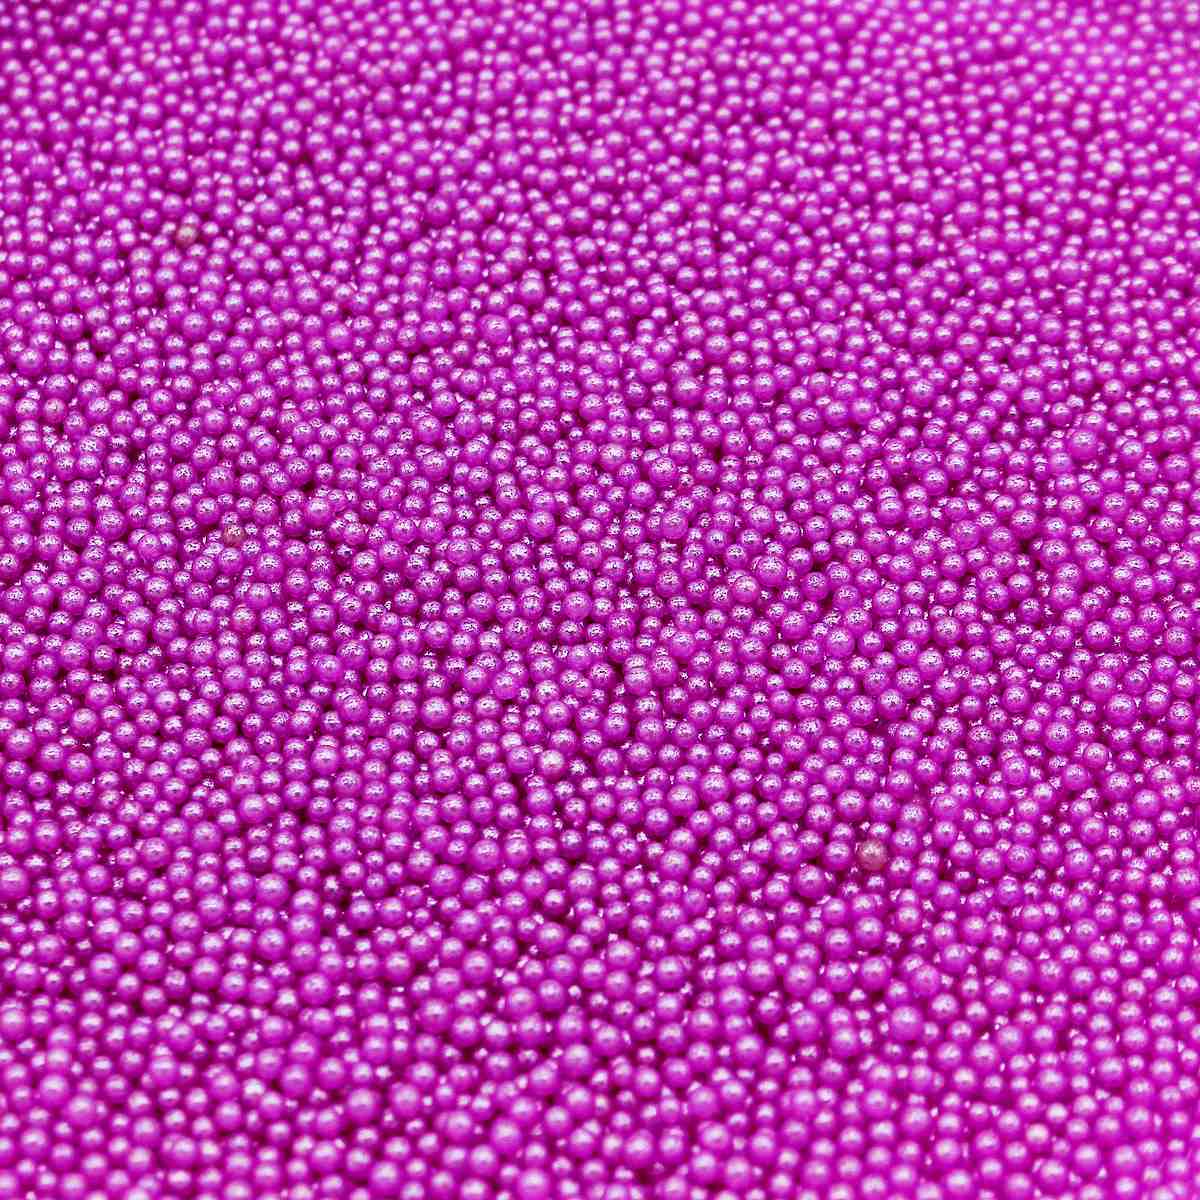 jags-mumbai Beads Rani pink Micro Mini Pearl Beads 45gm